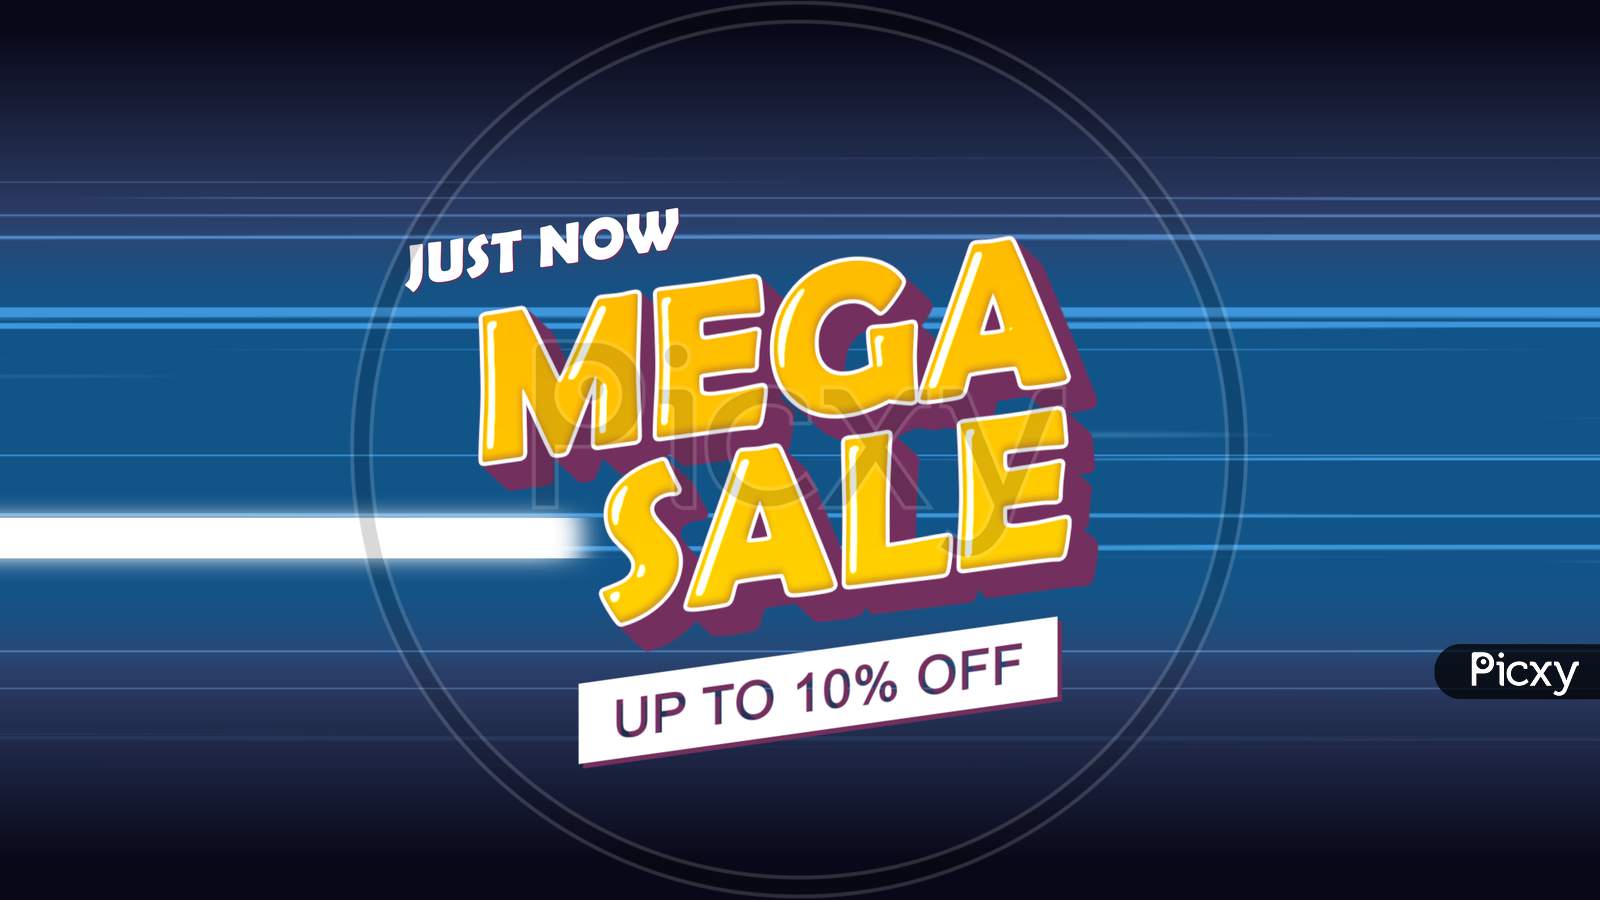 Just Now Mega Sale Up To 10% Off Word Illustration Use For Landing Page,Website, Poster, Banner, Flyer,Sale Promotion,Advertising, Marketing